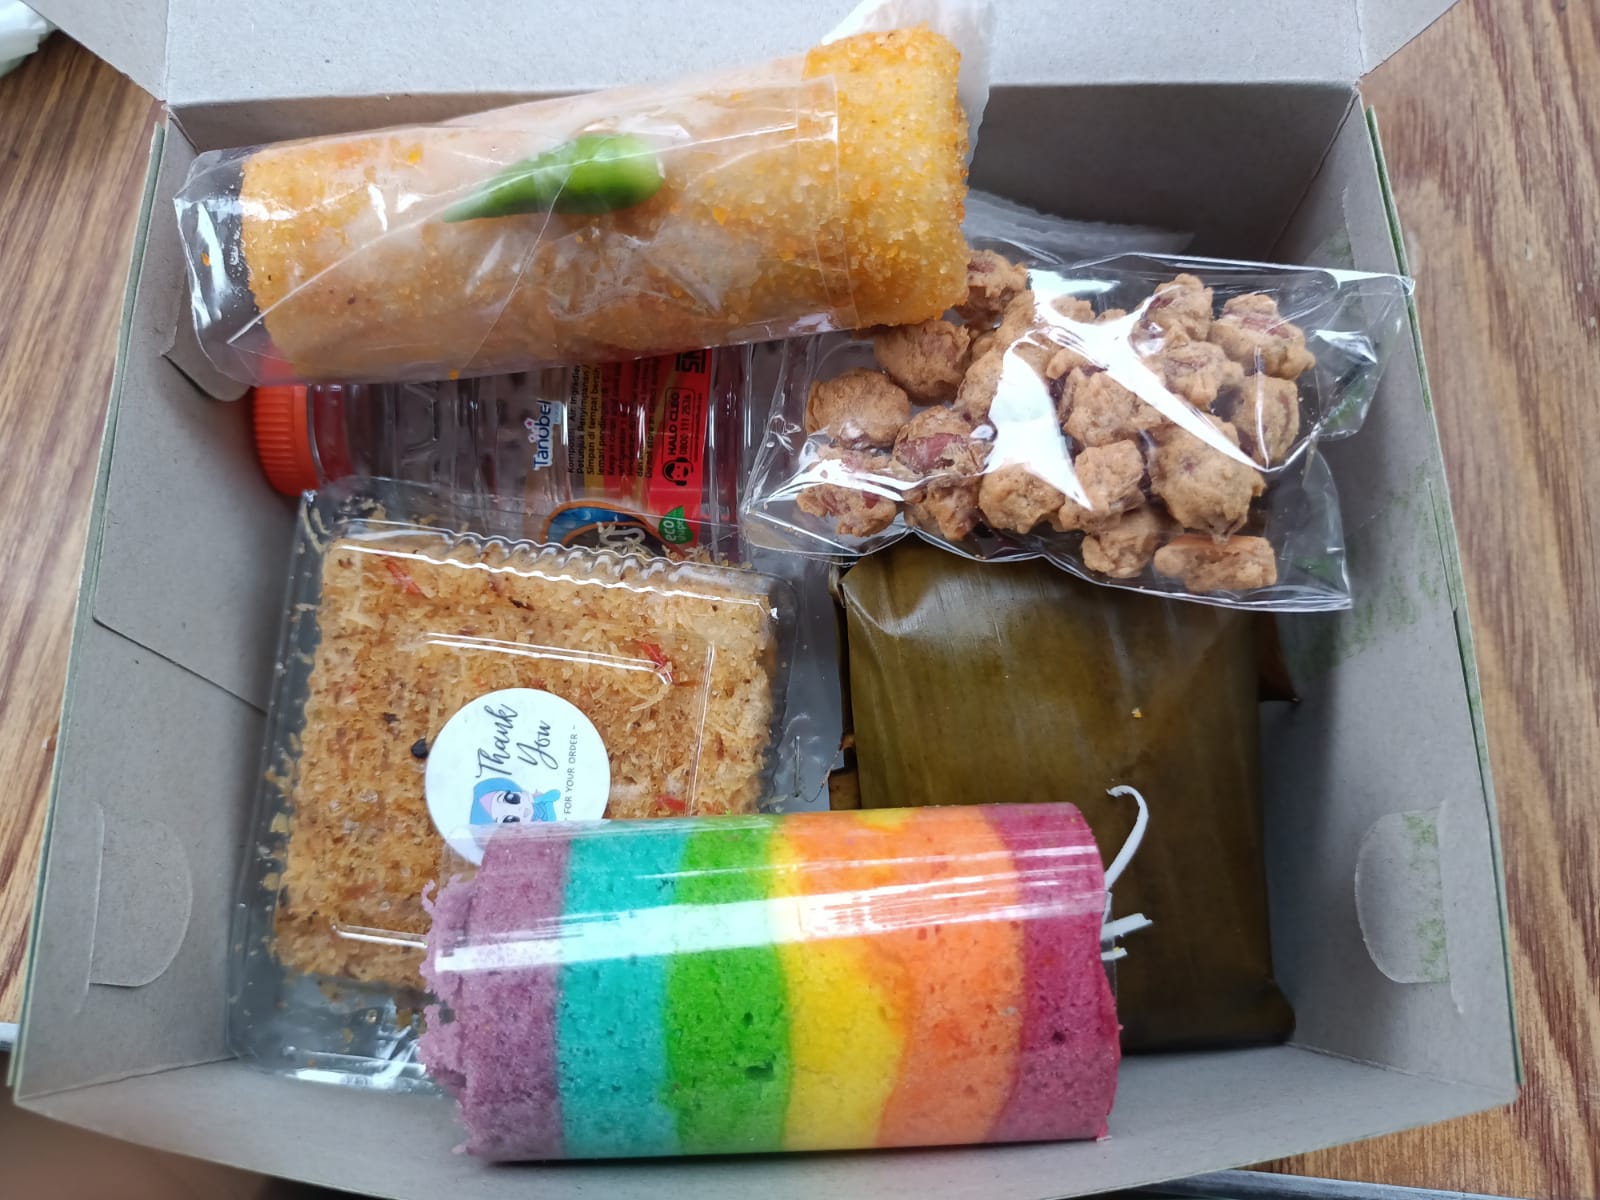 Paket Snack Box D